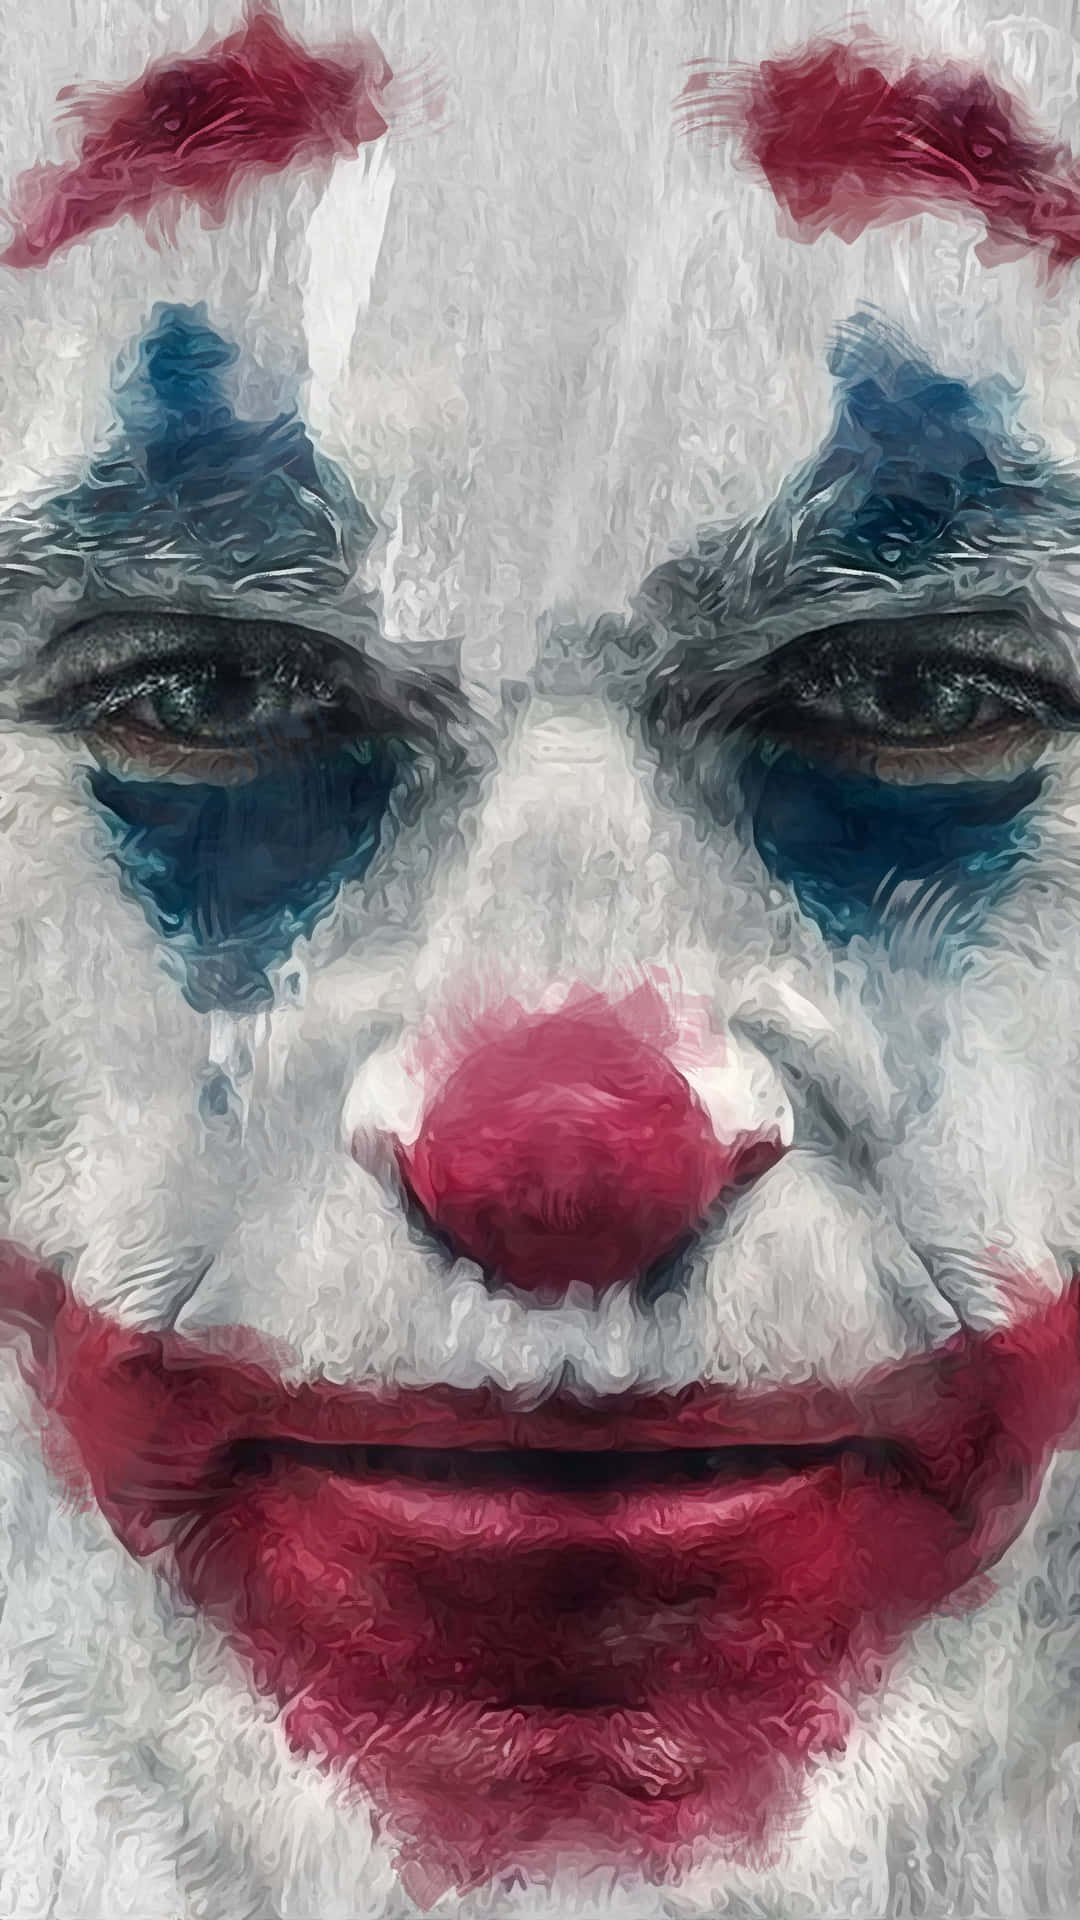 Joker Painting: A Splash of Chaos Wallpaper